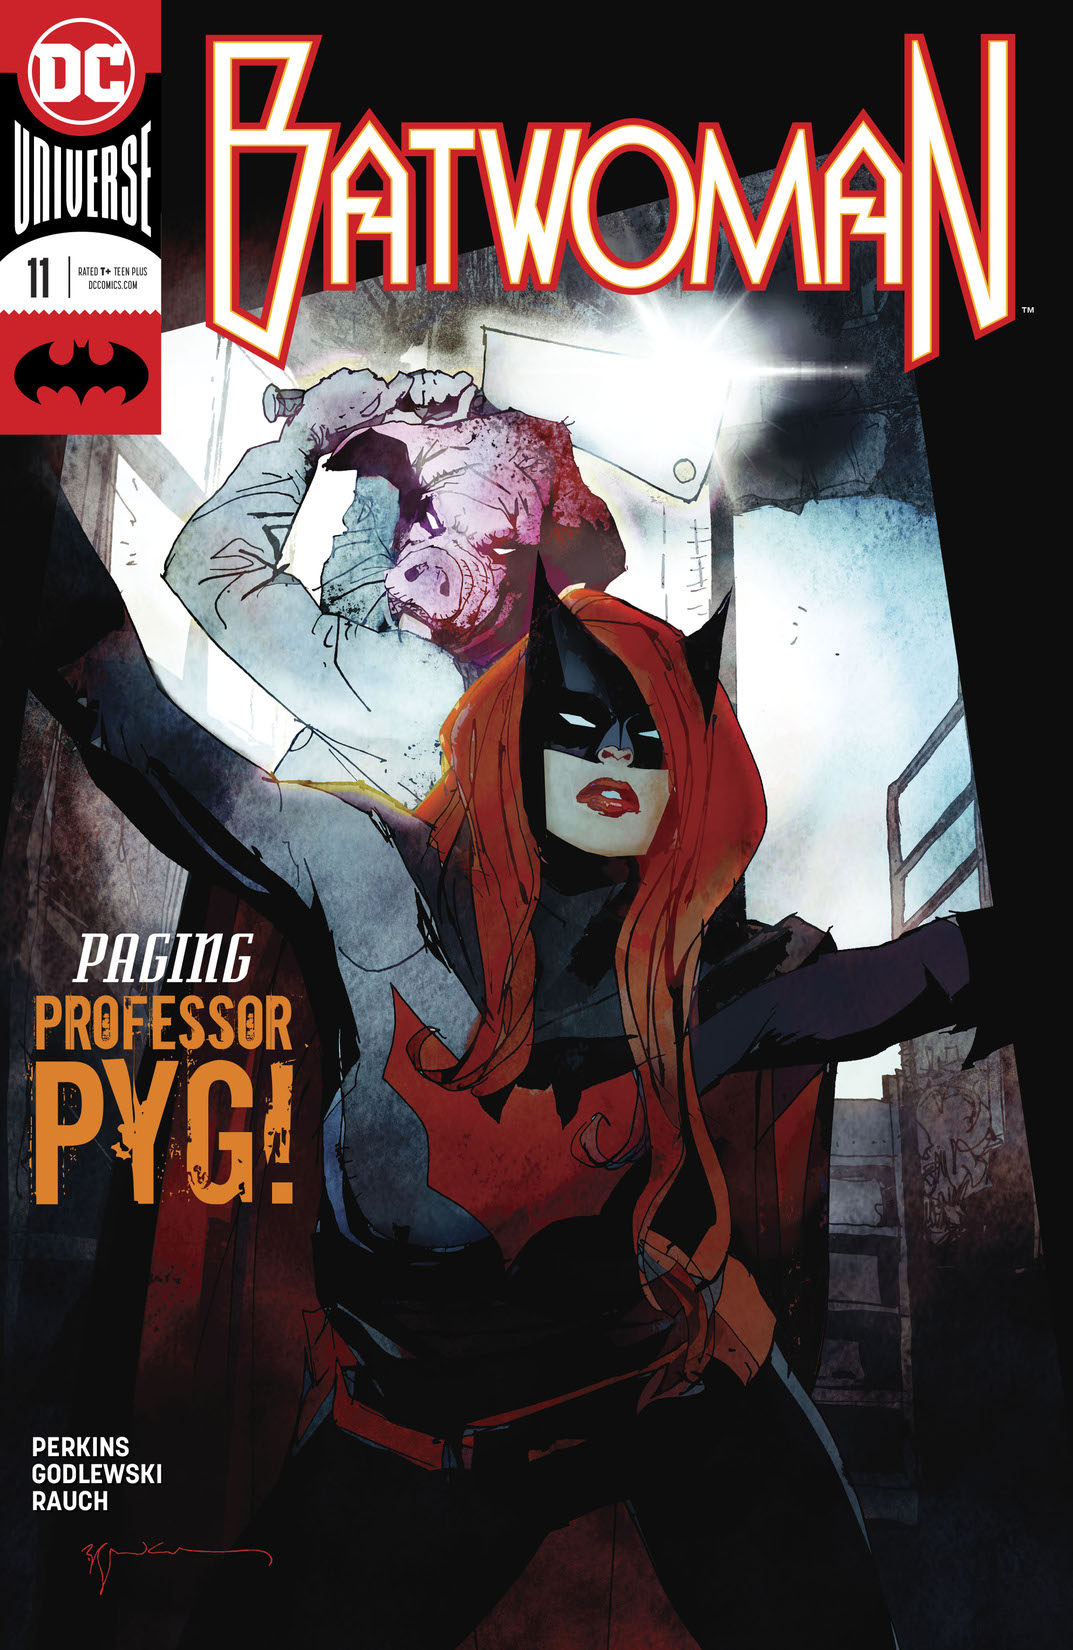 Batwoman (2017-) #11 preview images